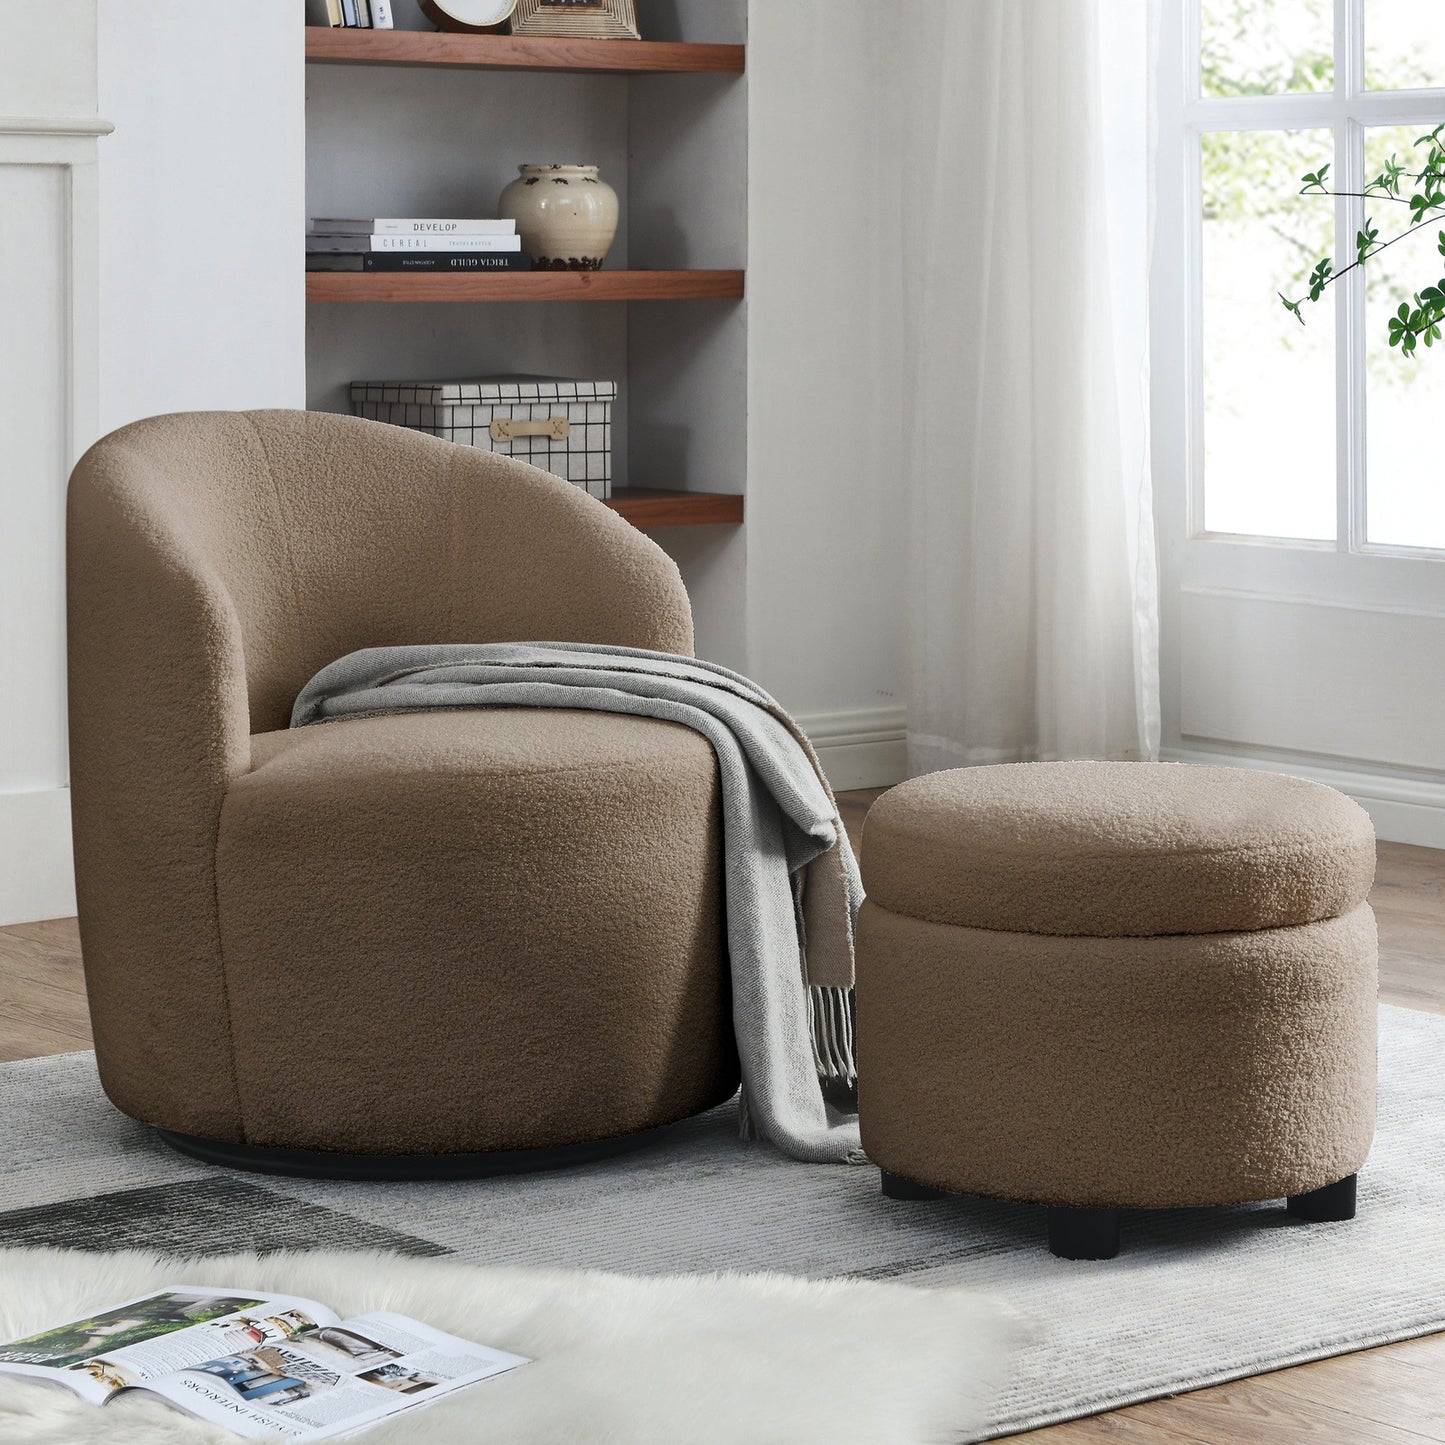 Welike Modern Teddy Fabric Barrel Chair & Ottoman Set - Coffee